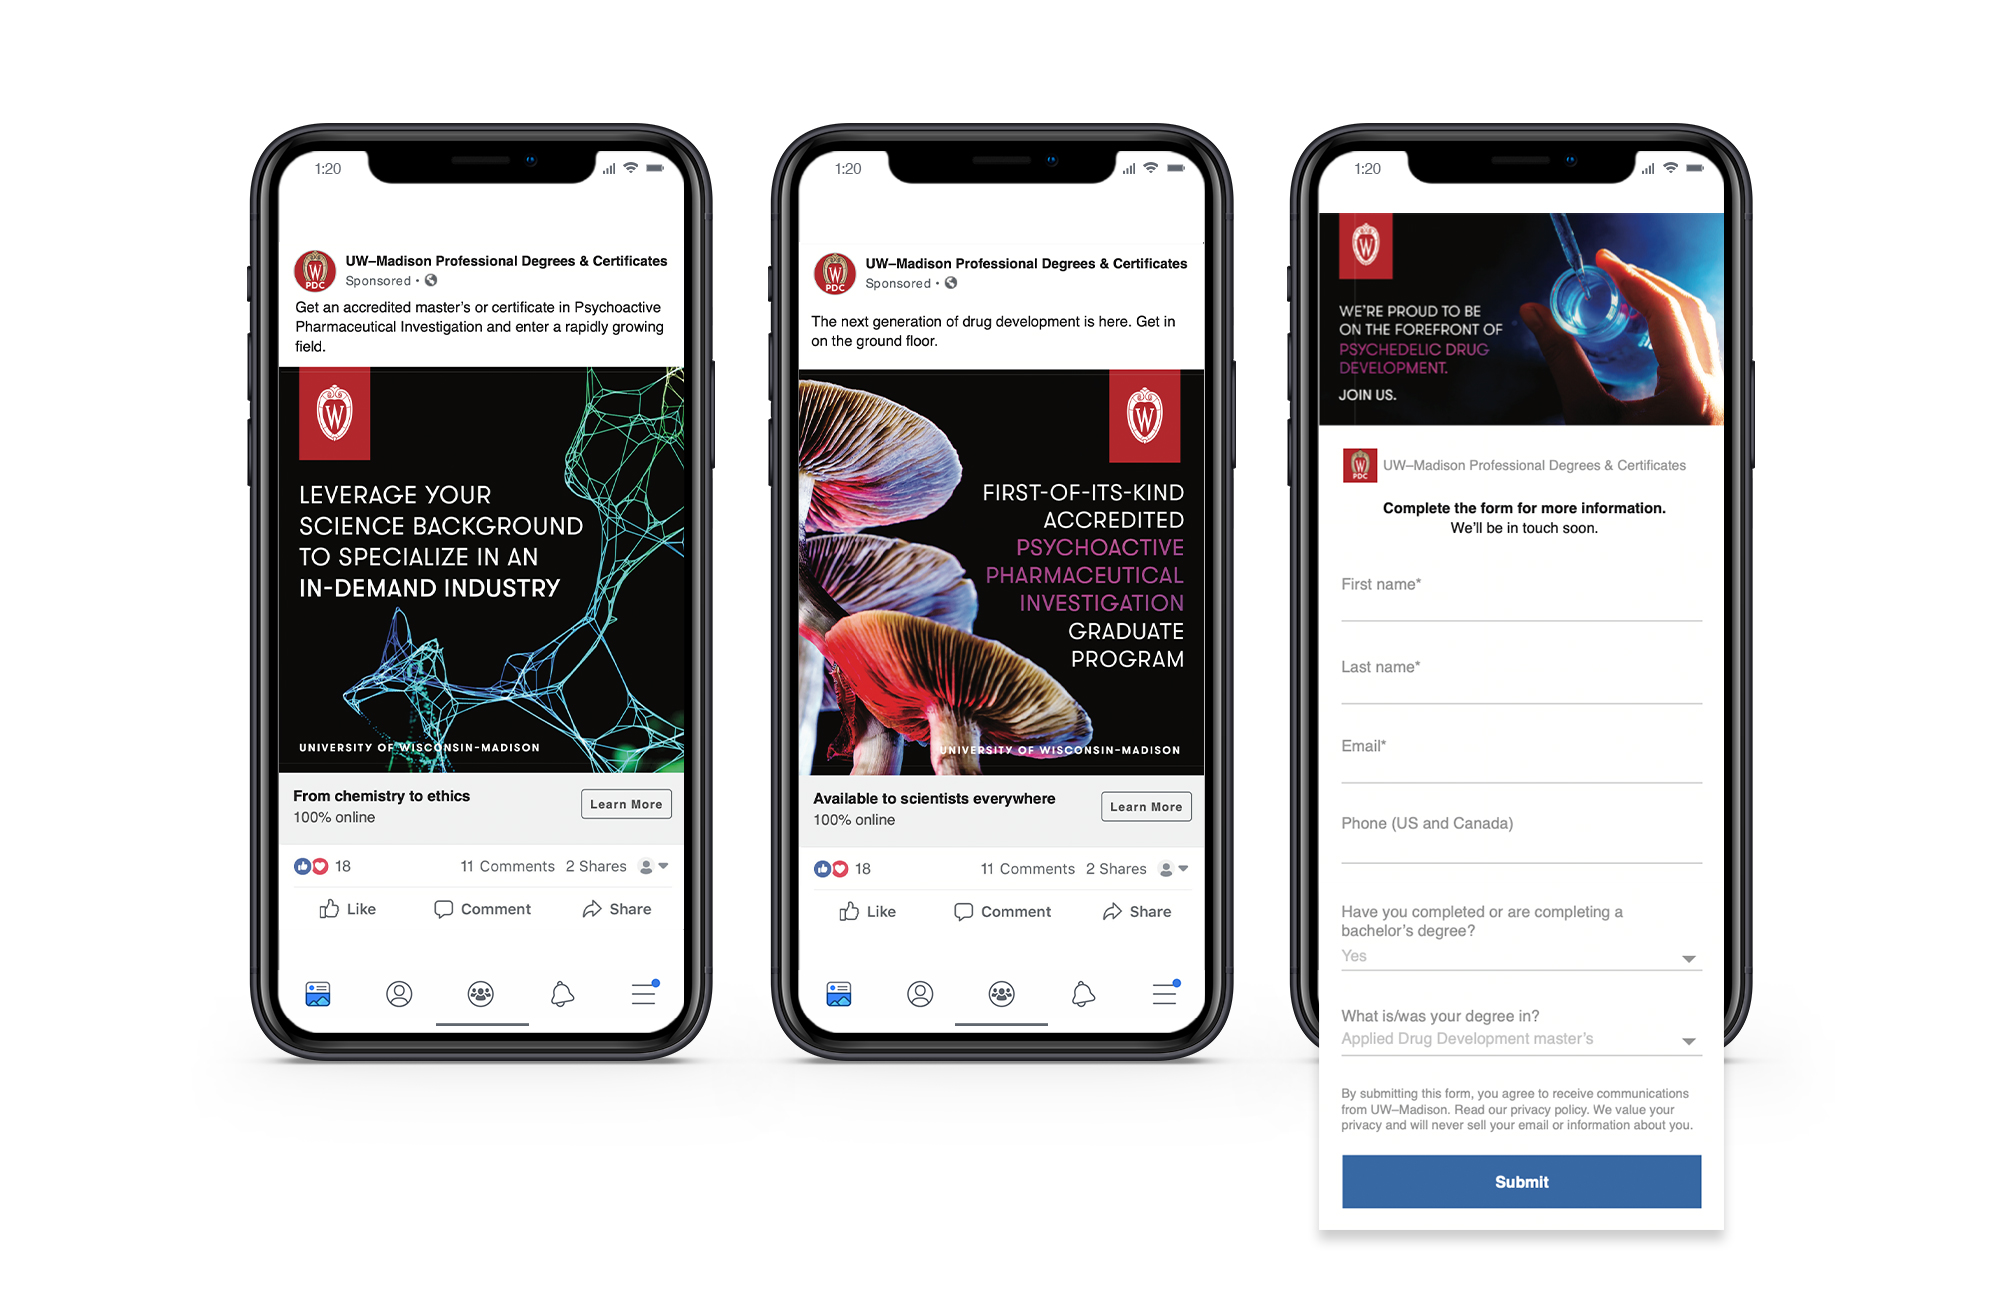 Three UW–Madison pharmaceutical sciences online graduate program digital ads on mobile phone screens